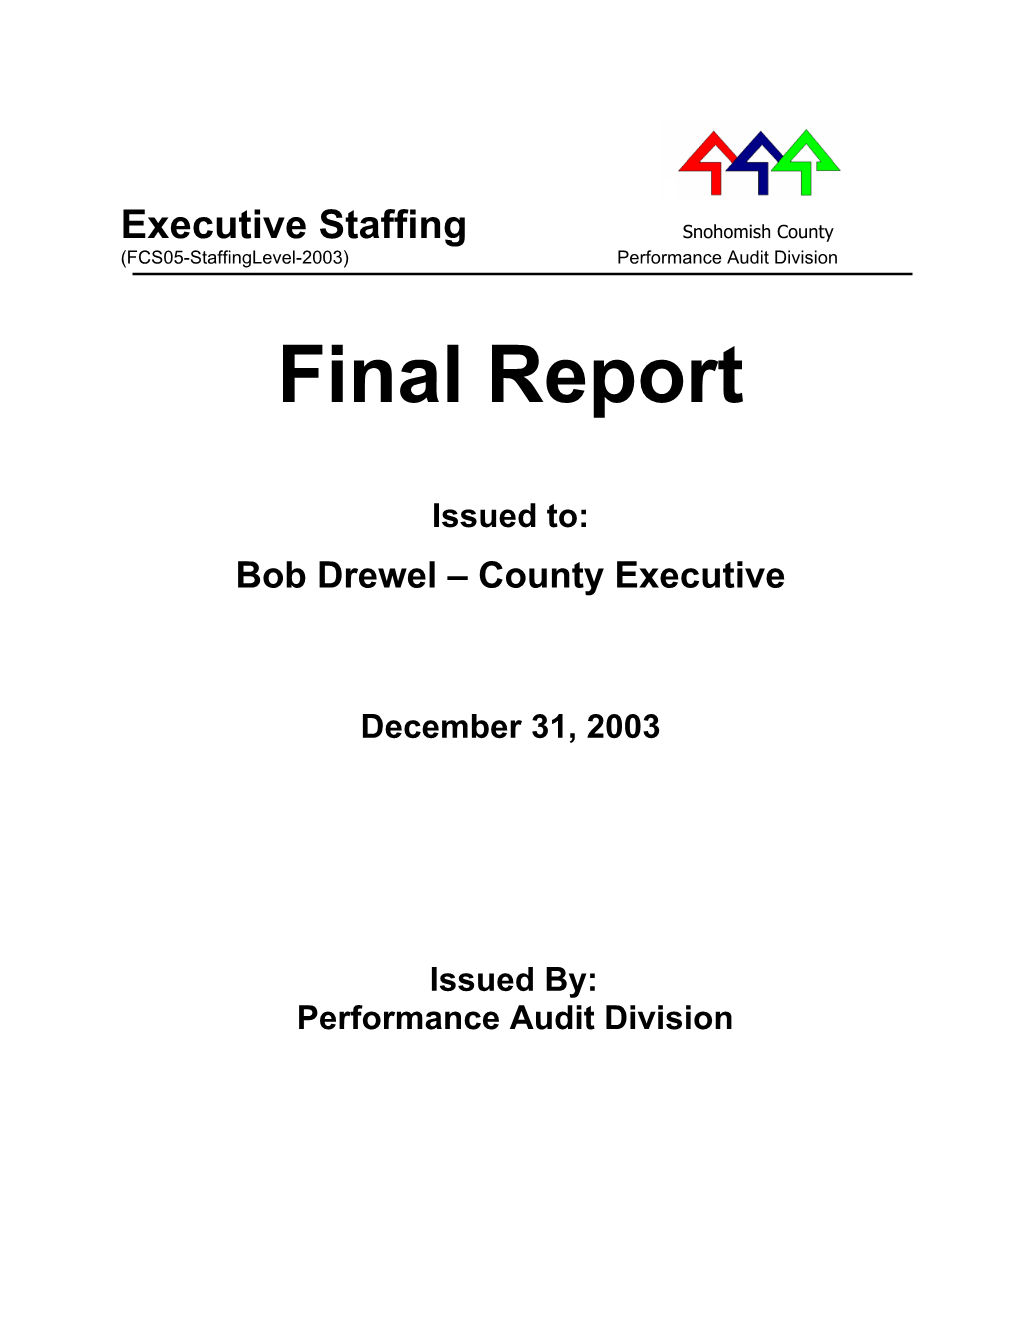 2003 Executive Staffing